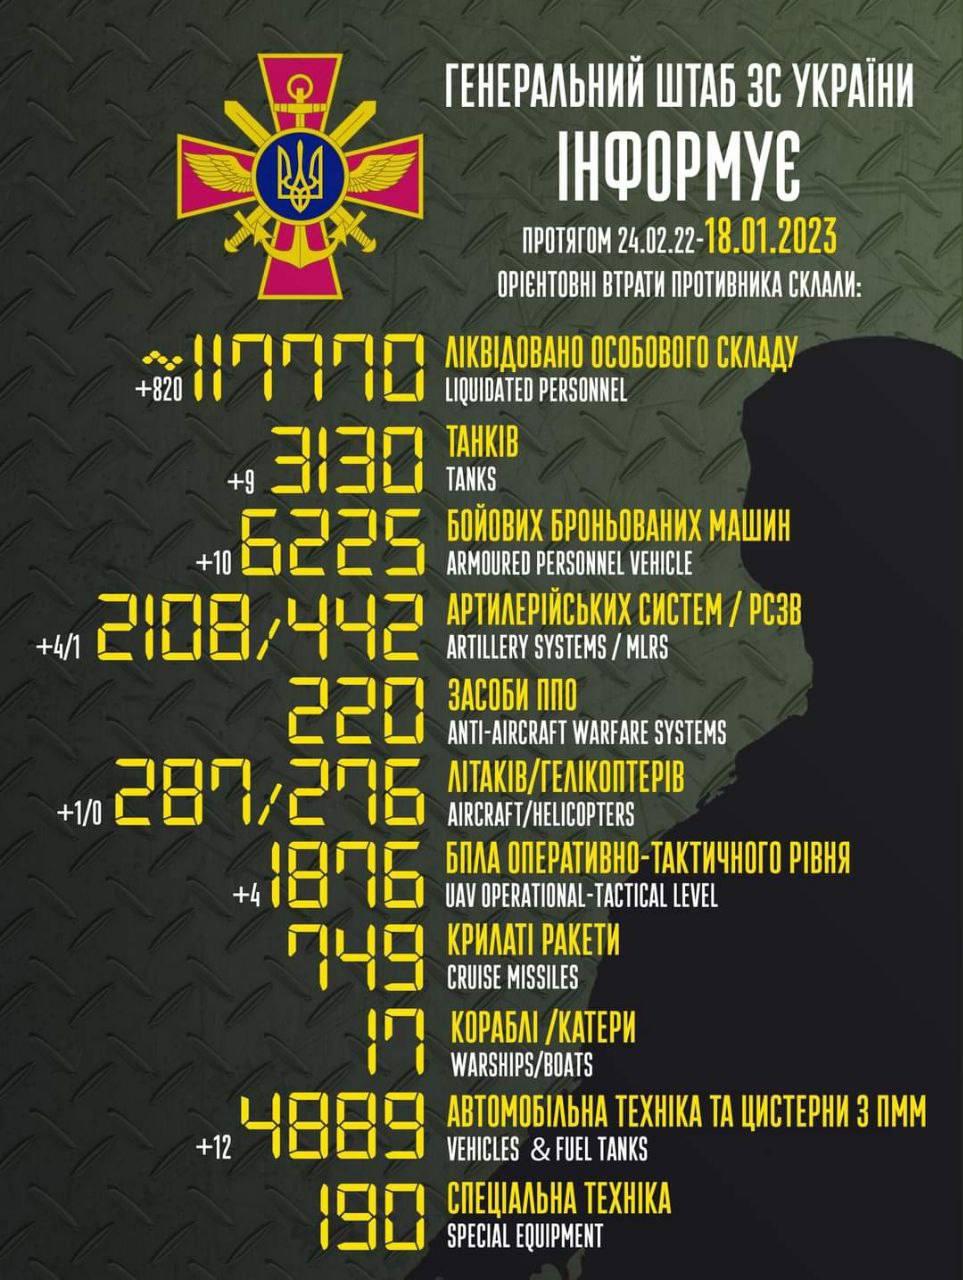 Russia’s losses in Ukraine as of 18/01/2023